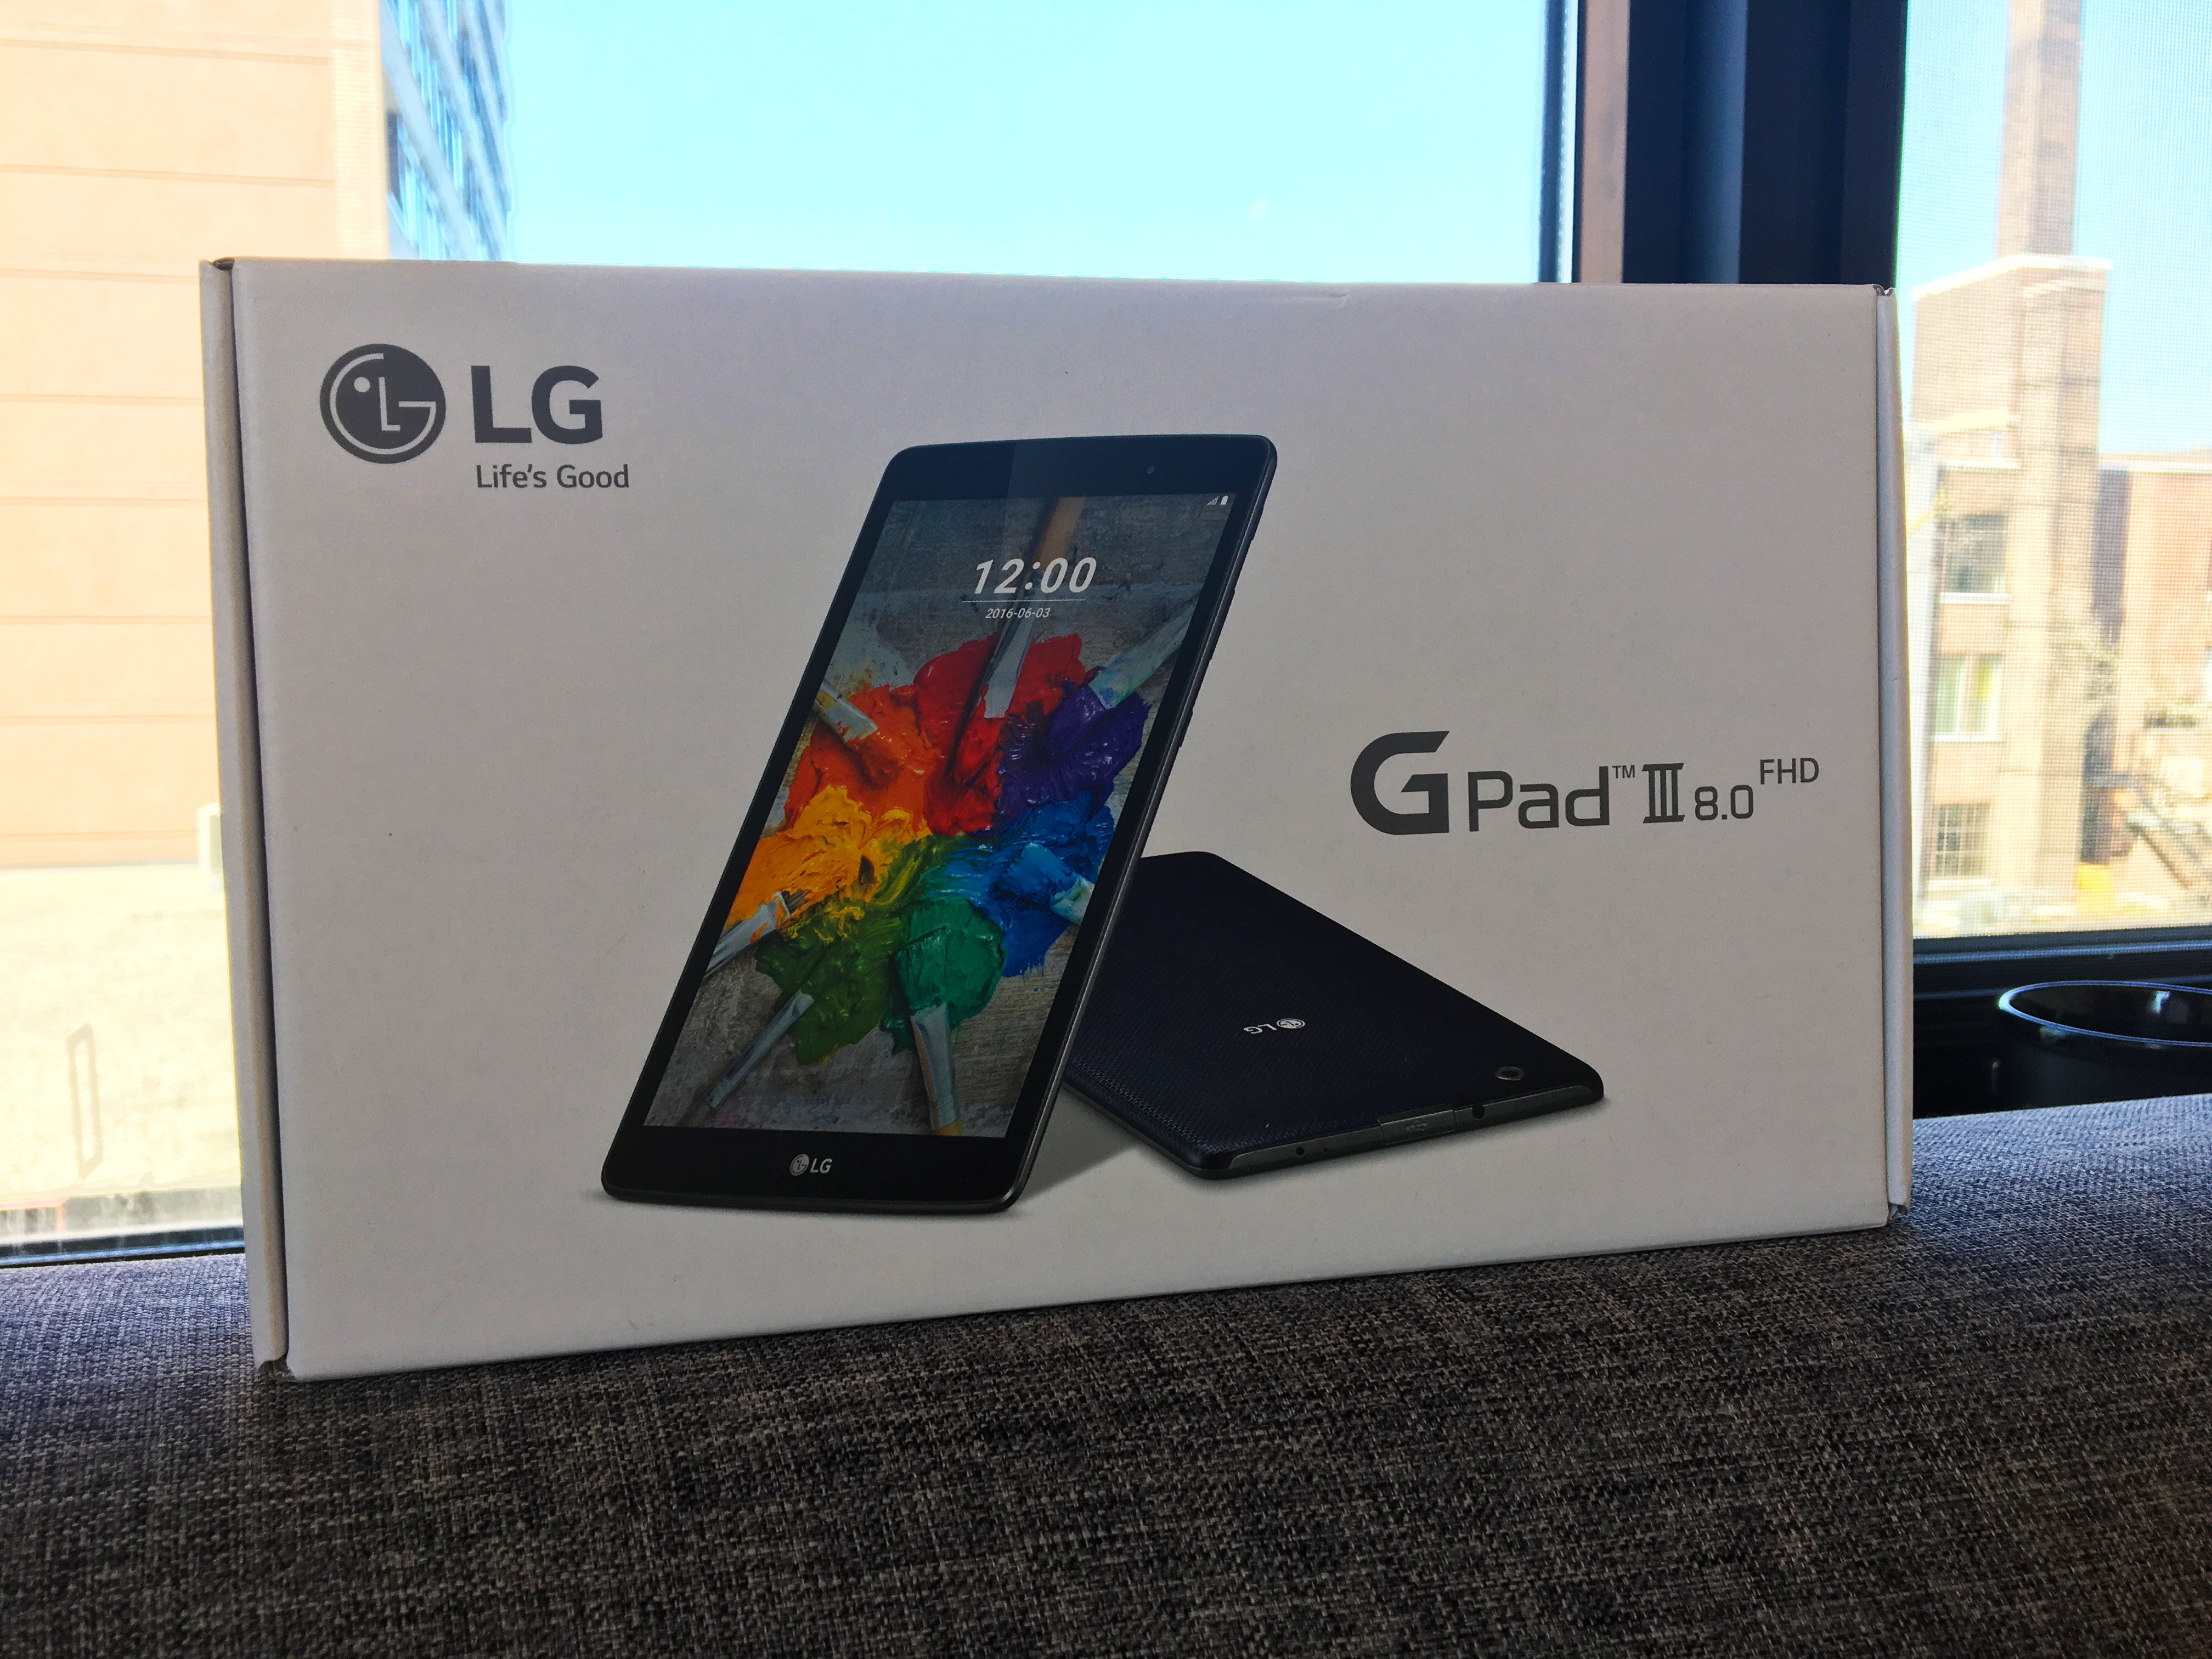 LG G Pad III 8.0 tablet box